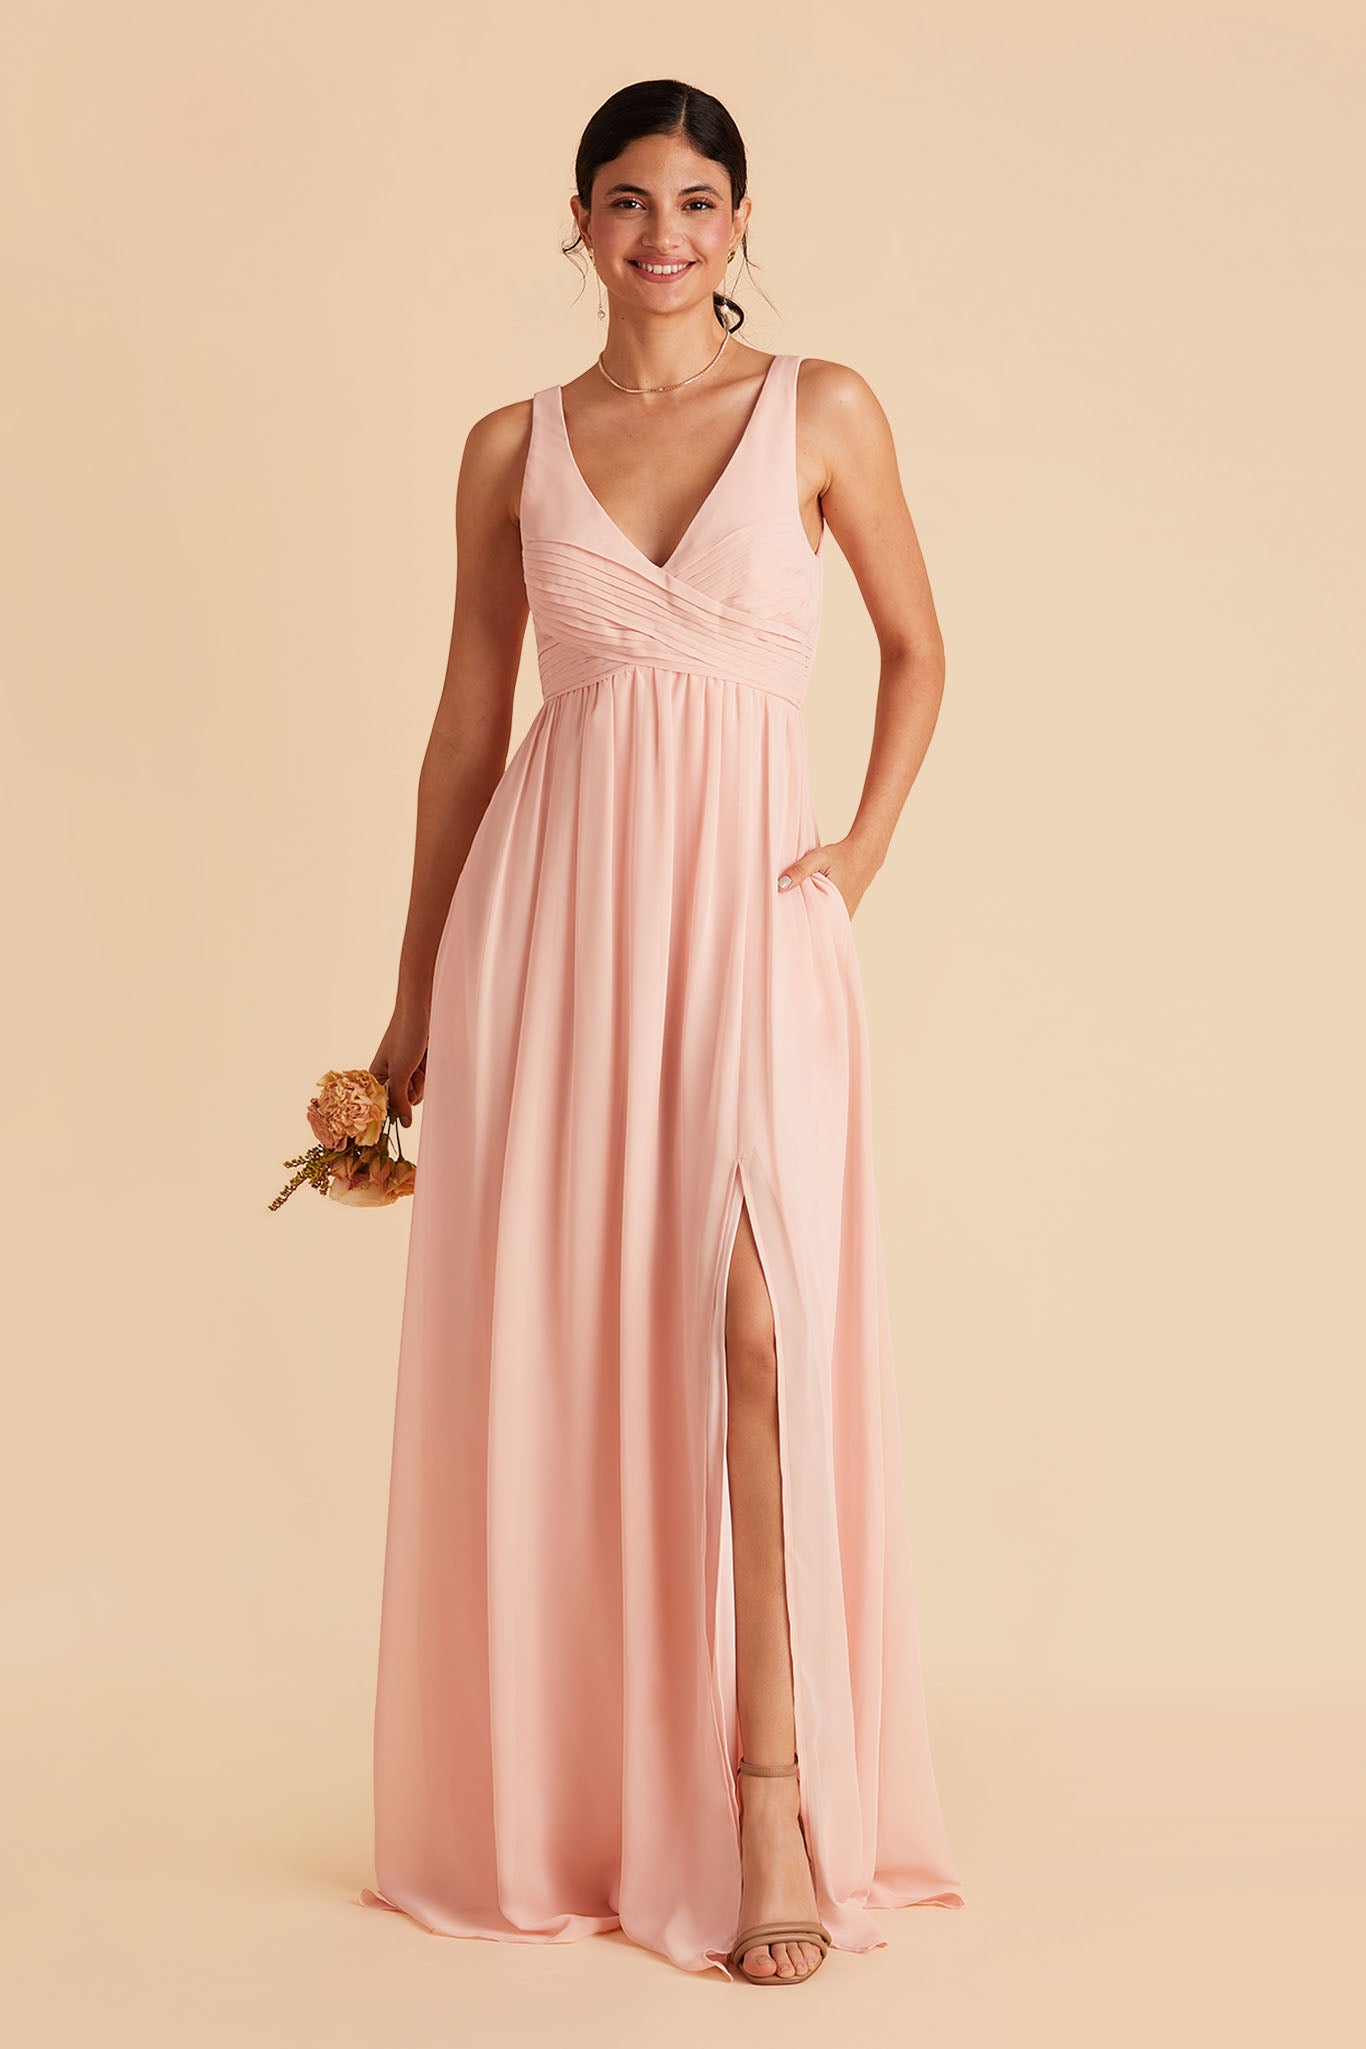 Romantic Blush Pink Ruffle Dress - Lizzie in Lace